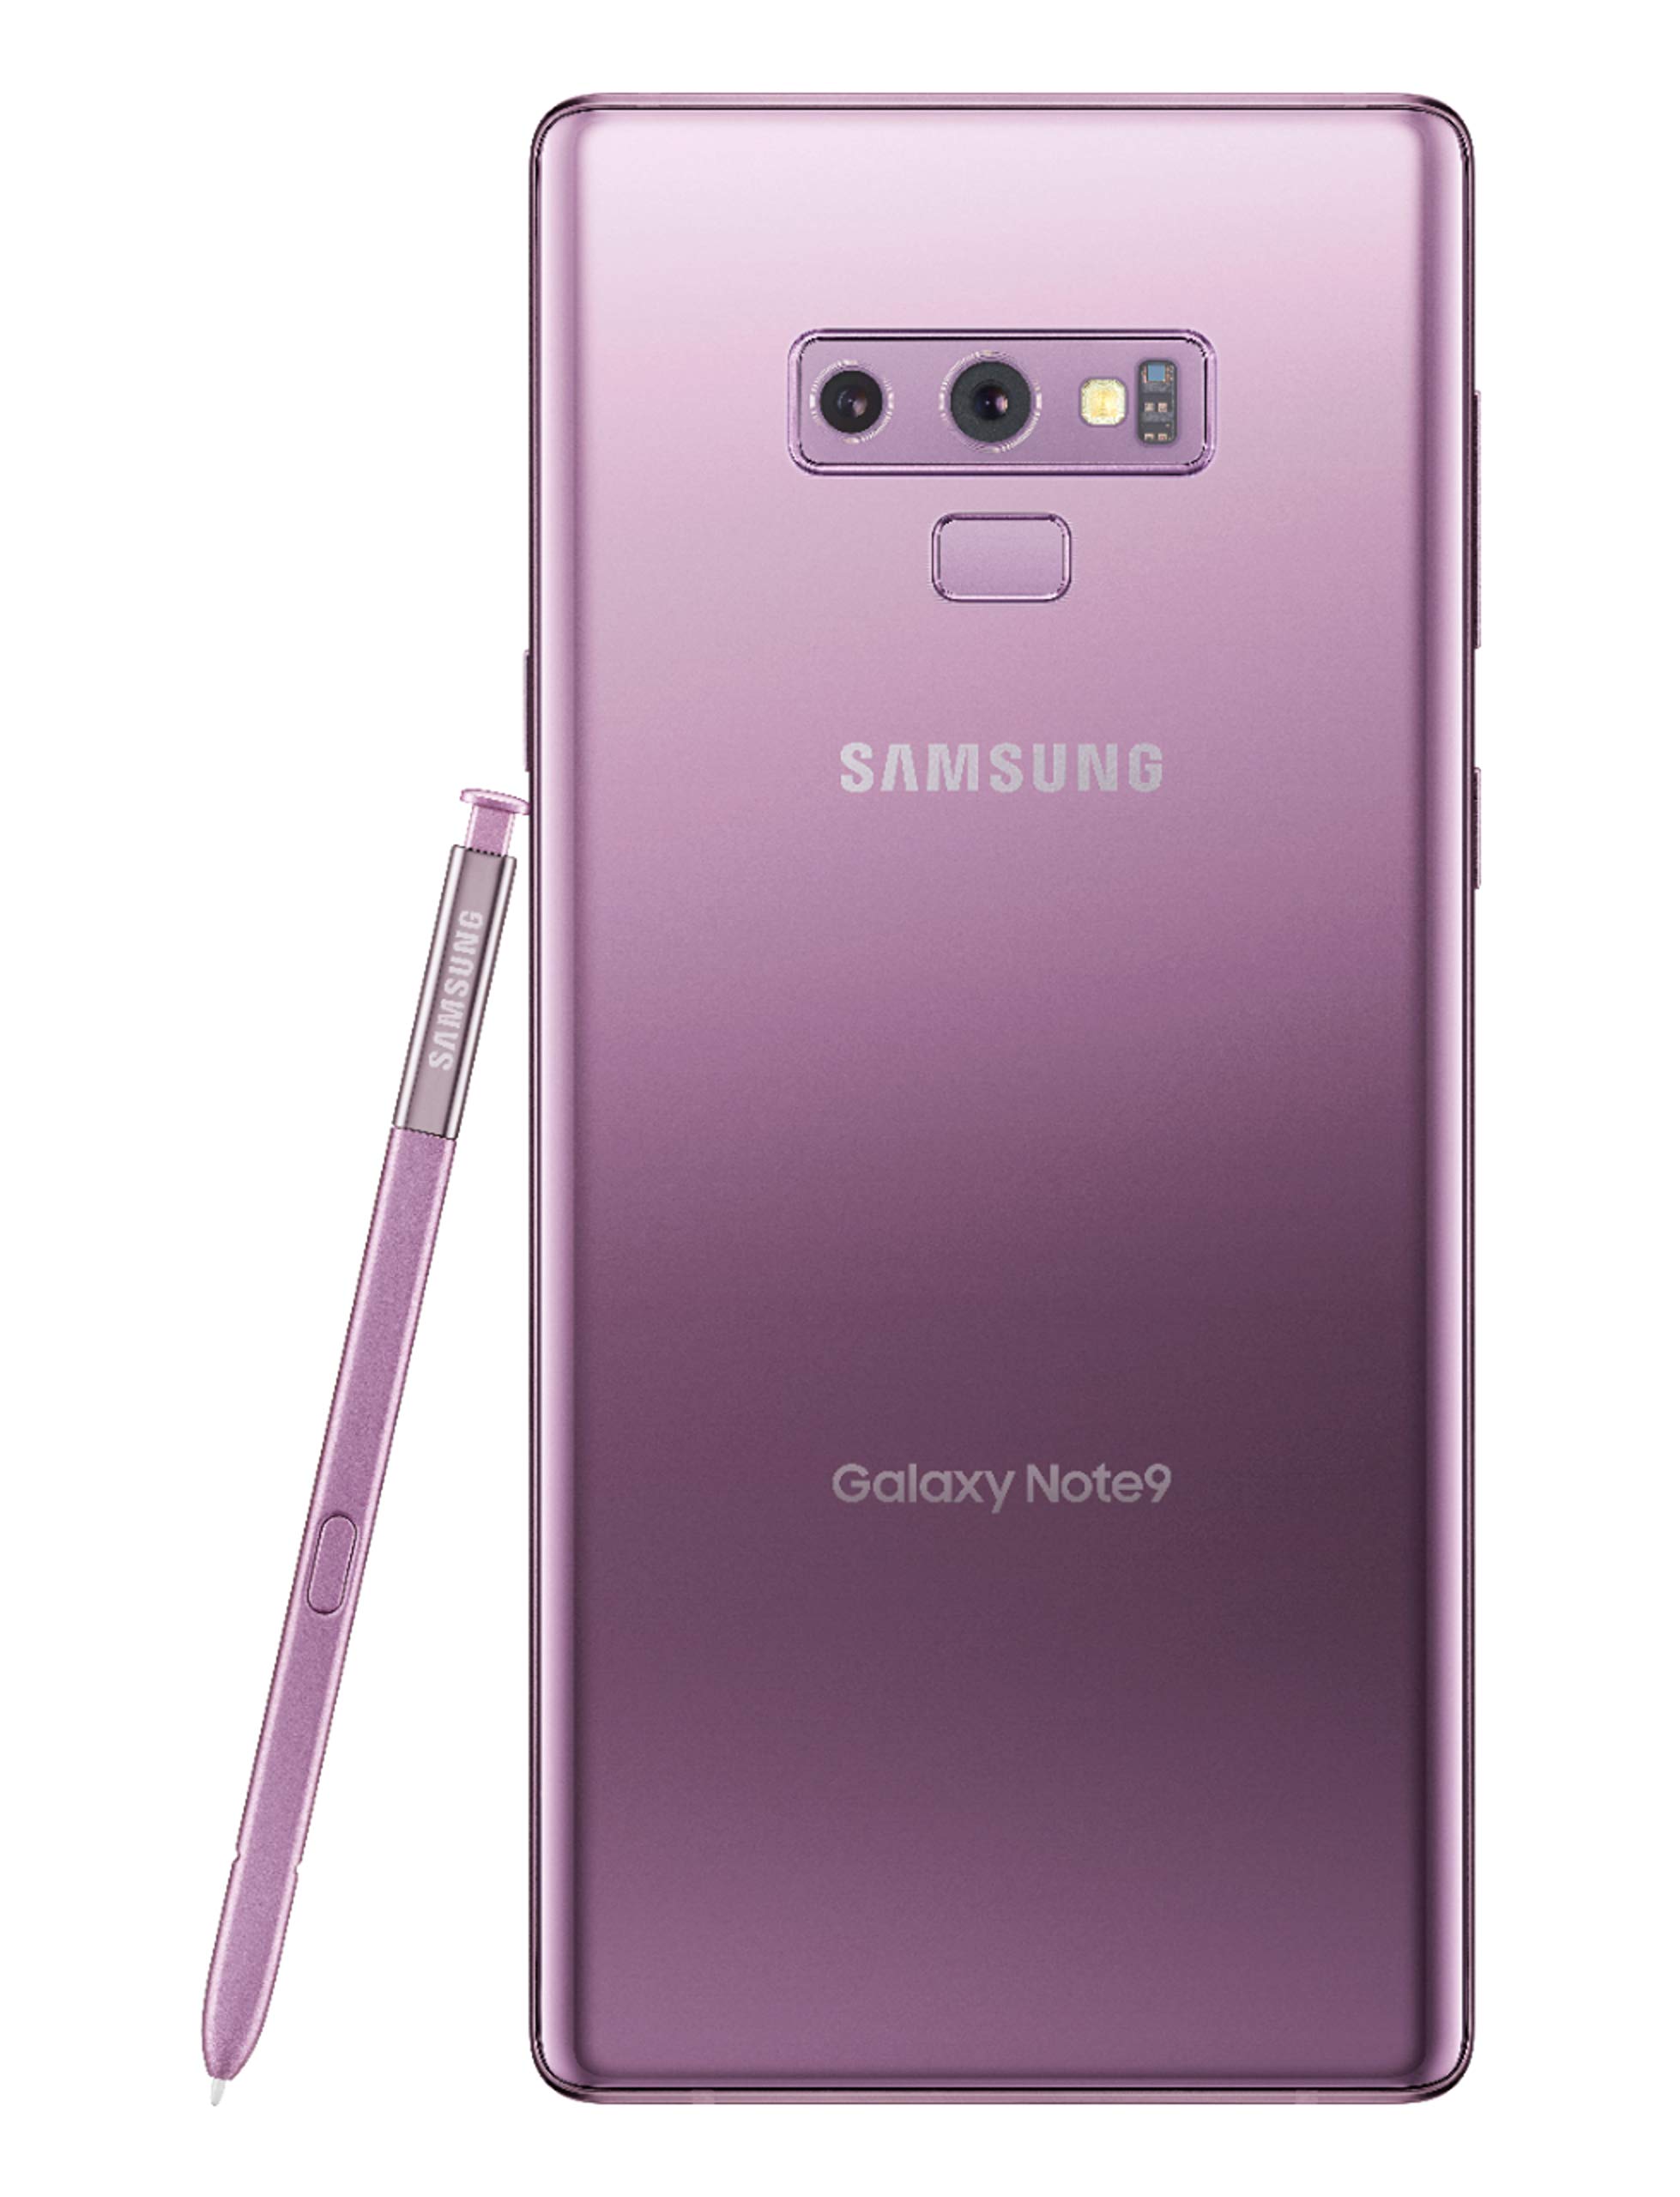 Samsung - Galaxy Note 9 (AT&T) - (Factory Unlocked) Lavender Purple - 128 GB